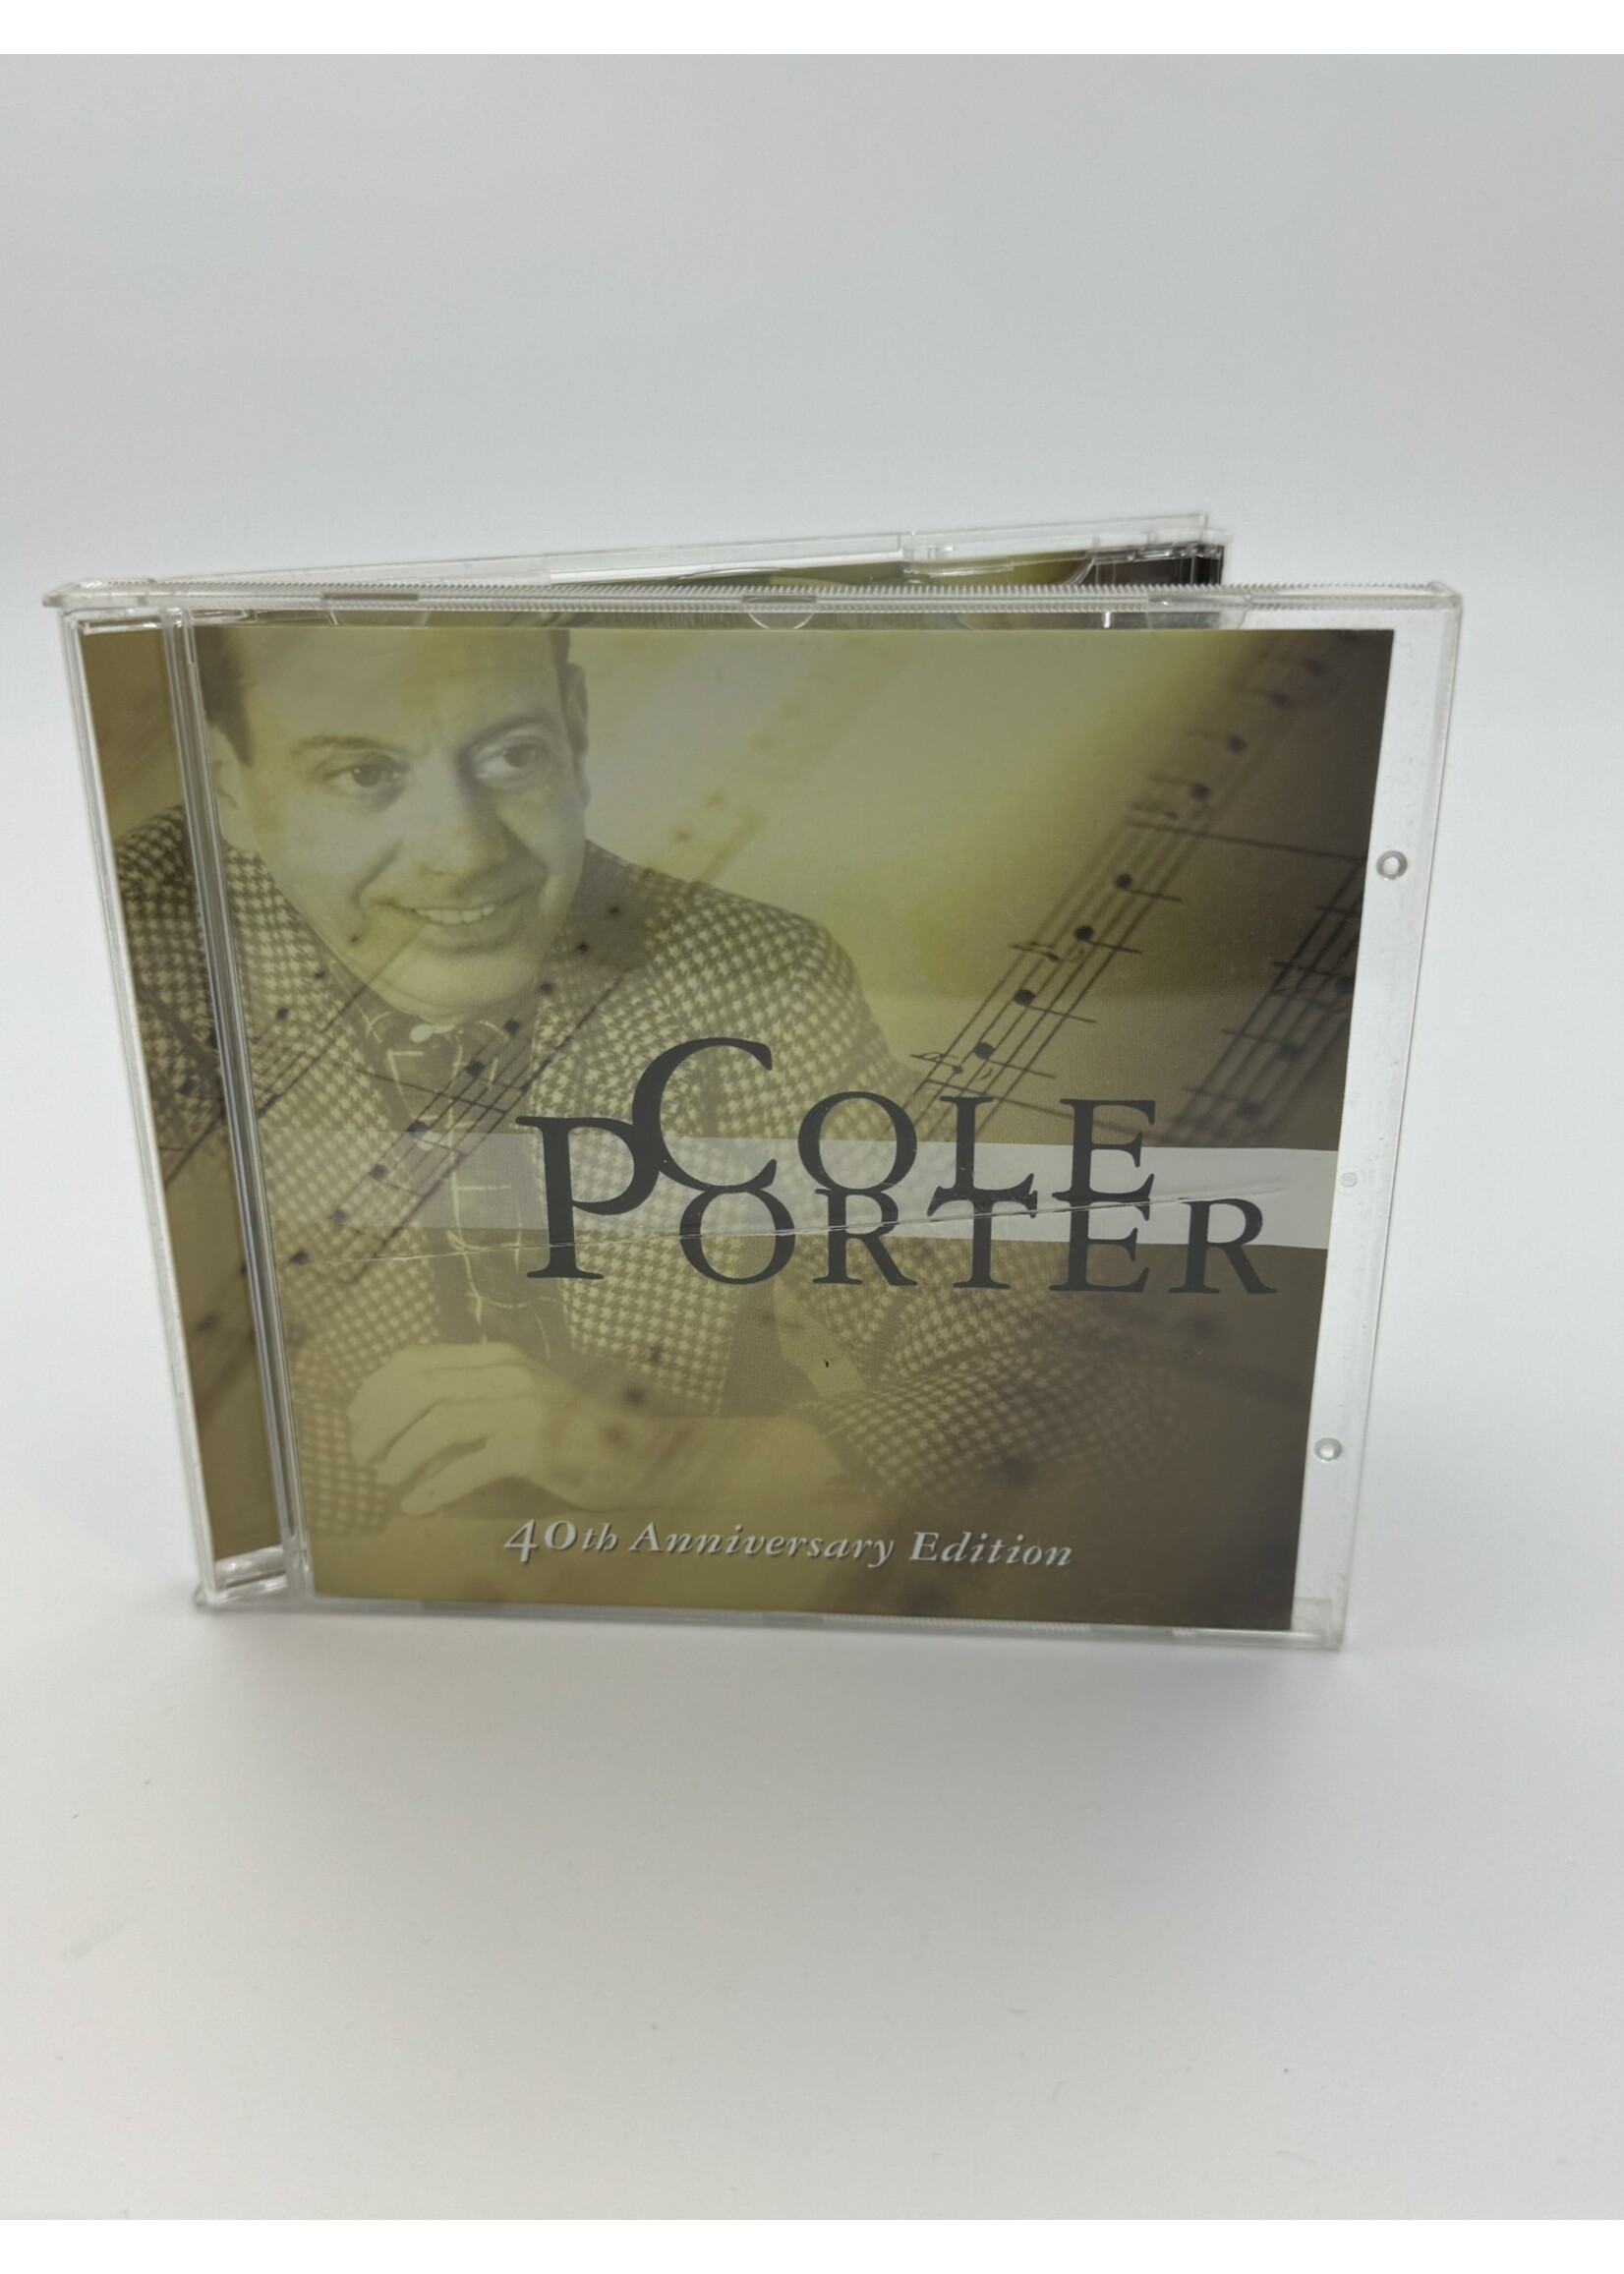 CD Cole Porter 40th Anniversary Edition CD